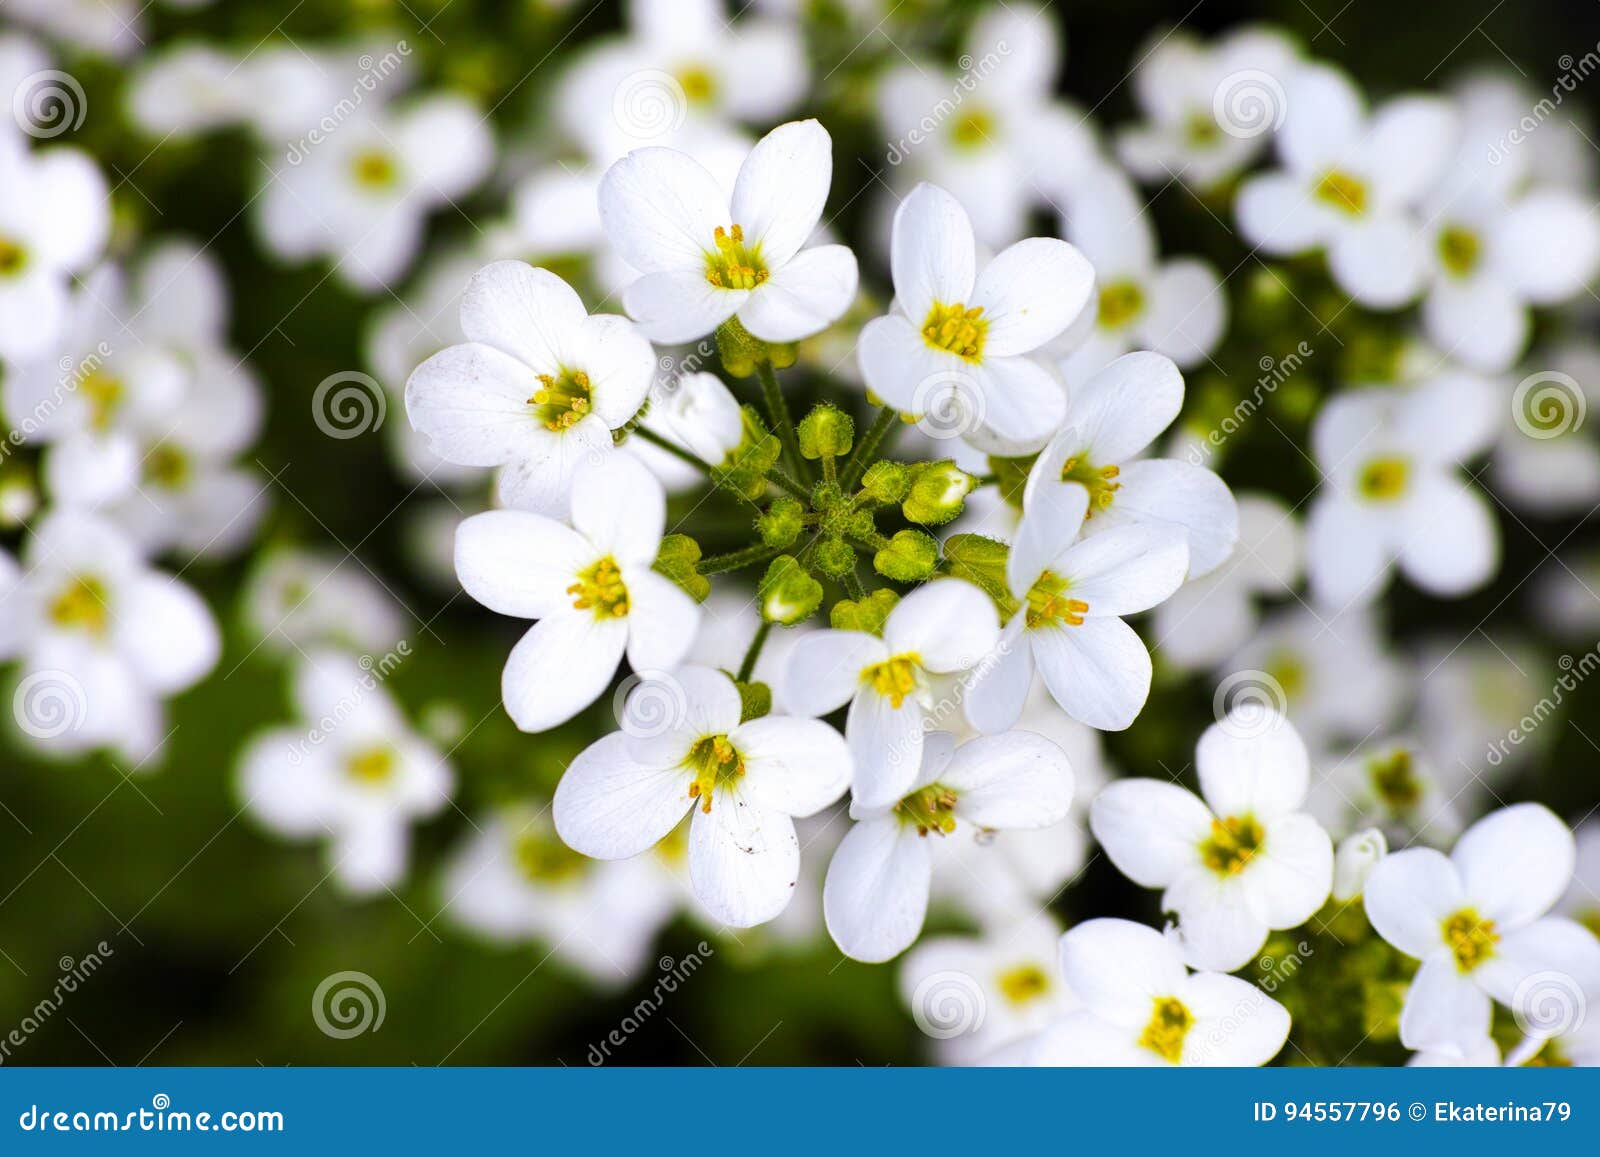 Fleurs Blanches De Myosotis Photo stock - Image du jardin, vert: 94557796